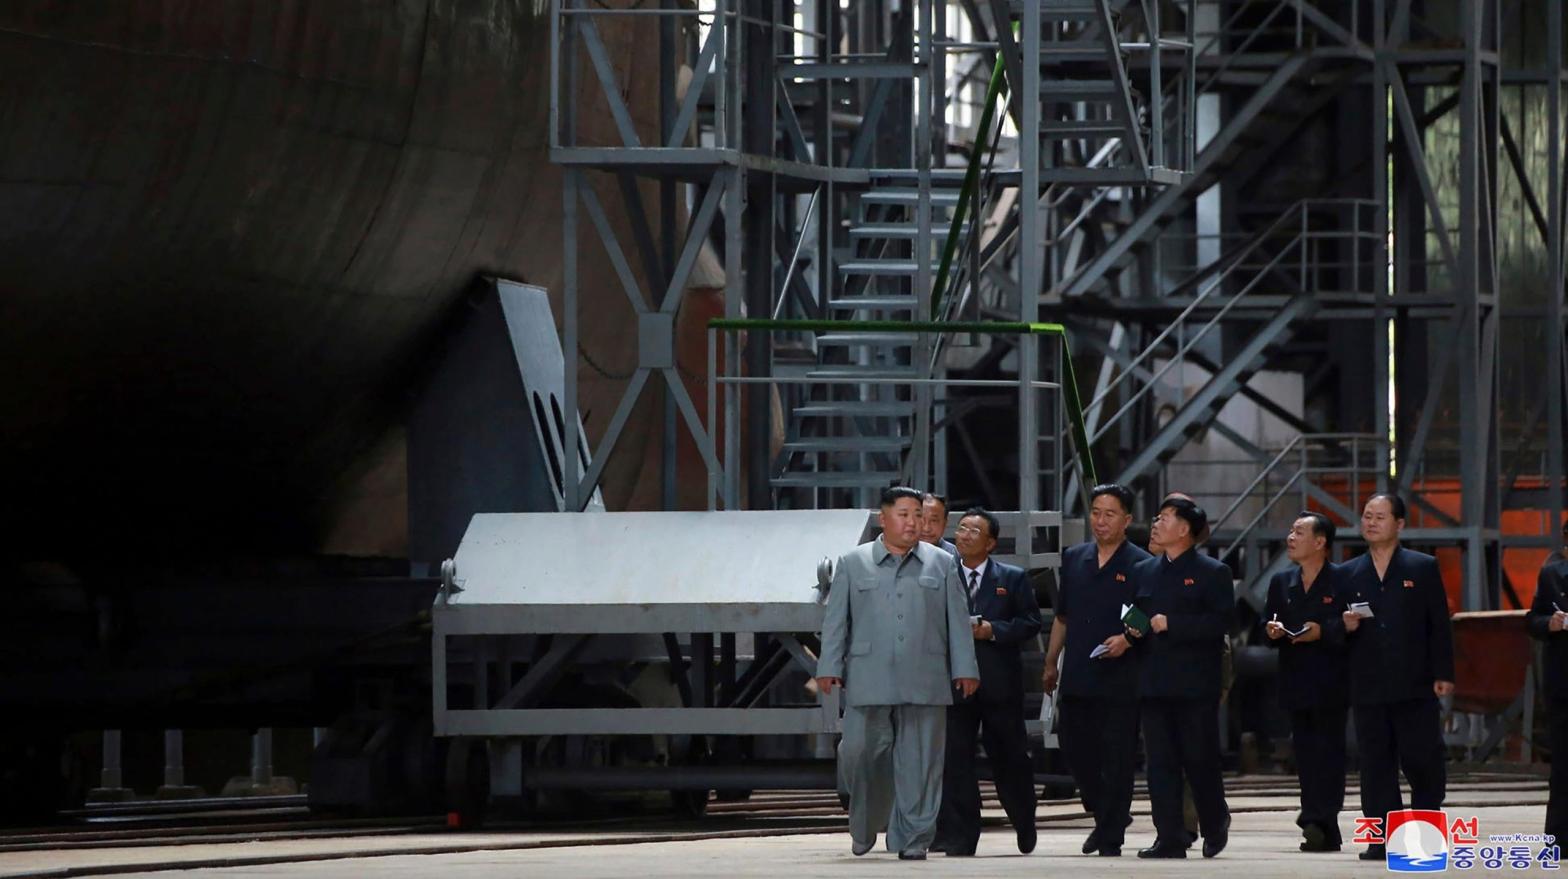 File photo of North Korean dictator Kim Jong Un inspecting a submarine on July 23, 2019. (Photo: Korean Central News Agency/Korea News Service via AP, AP)